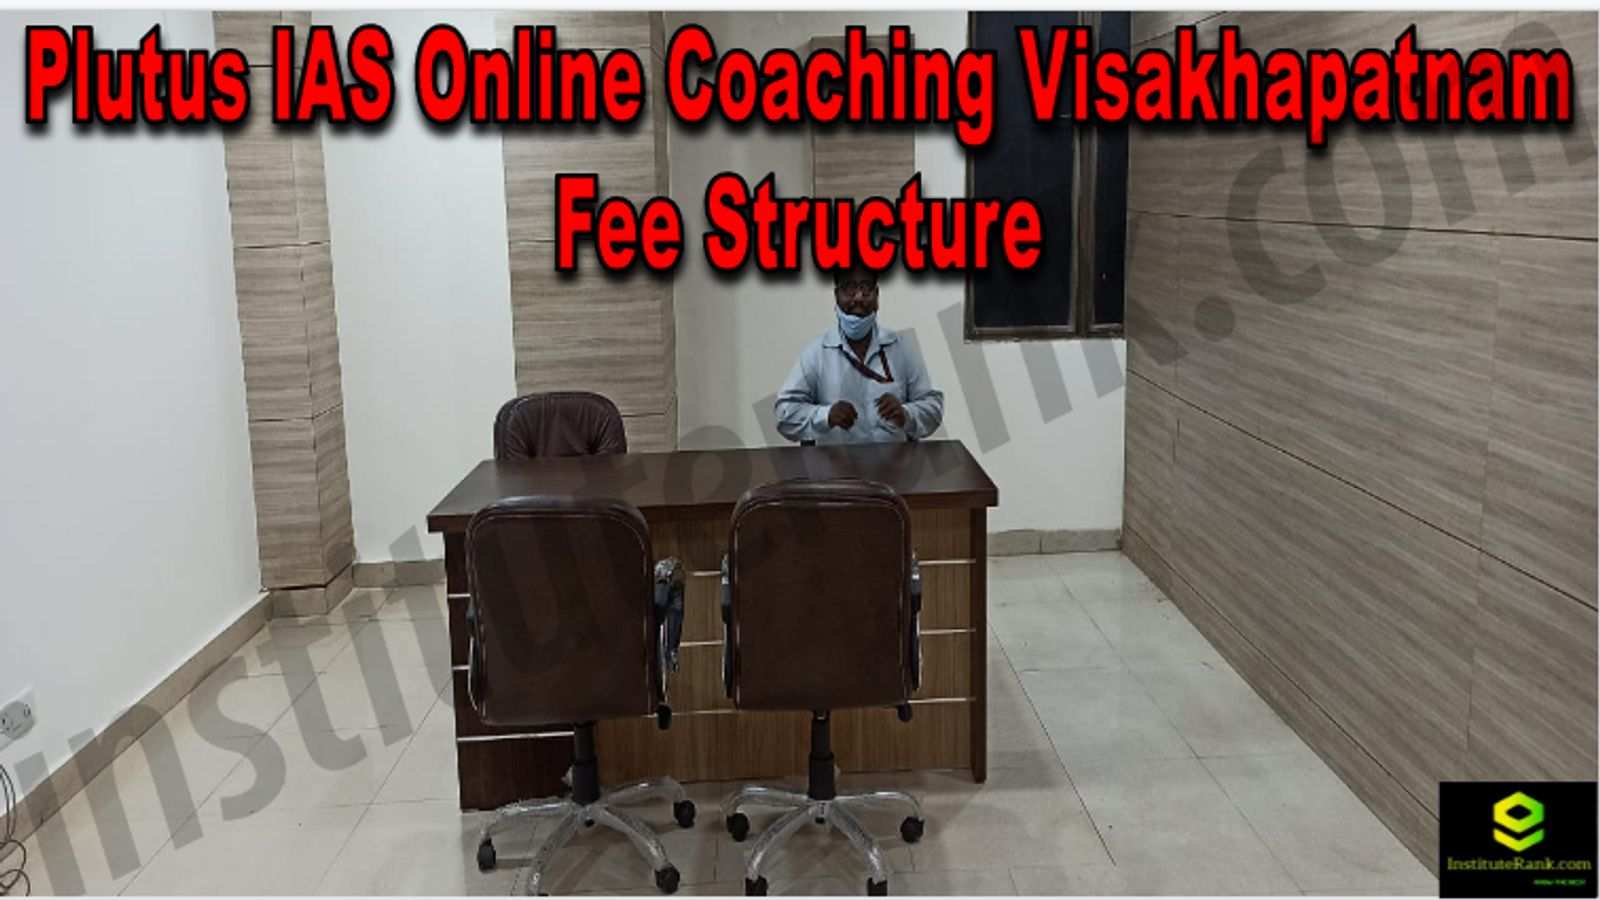 Plutus IAS Online Coaching Visakhapatnam Reviews Fee Structure